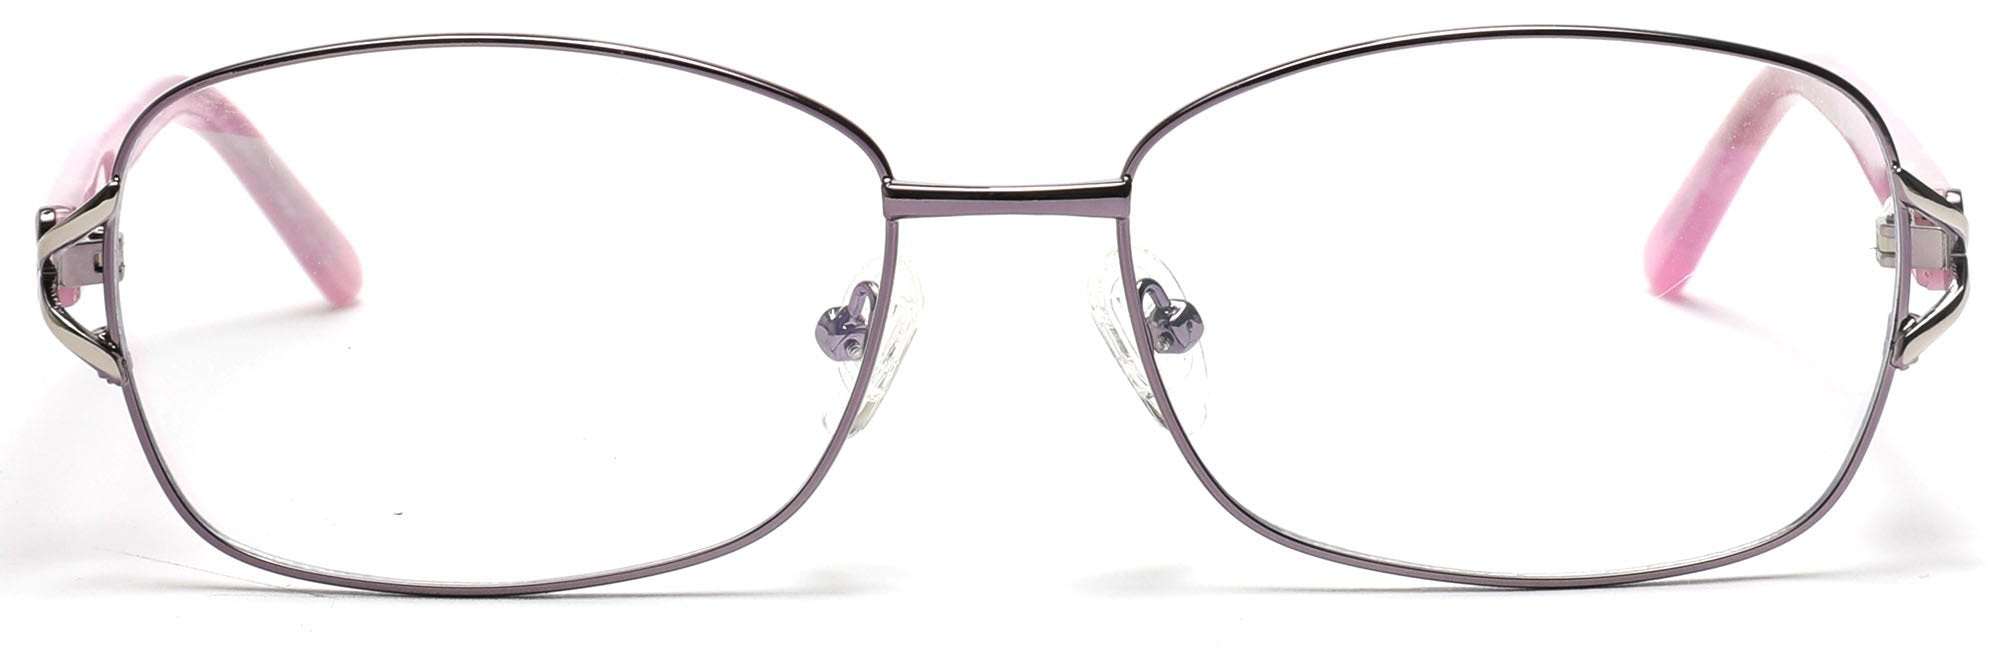 Tango Optics Metal Optical Eyeglasses Frame Luxe Stainless Steel Virginia Apgar Square Purple Oval For Prescription Lens-Samba Shades